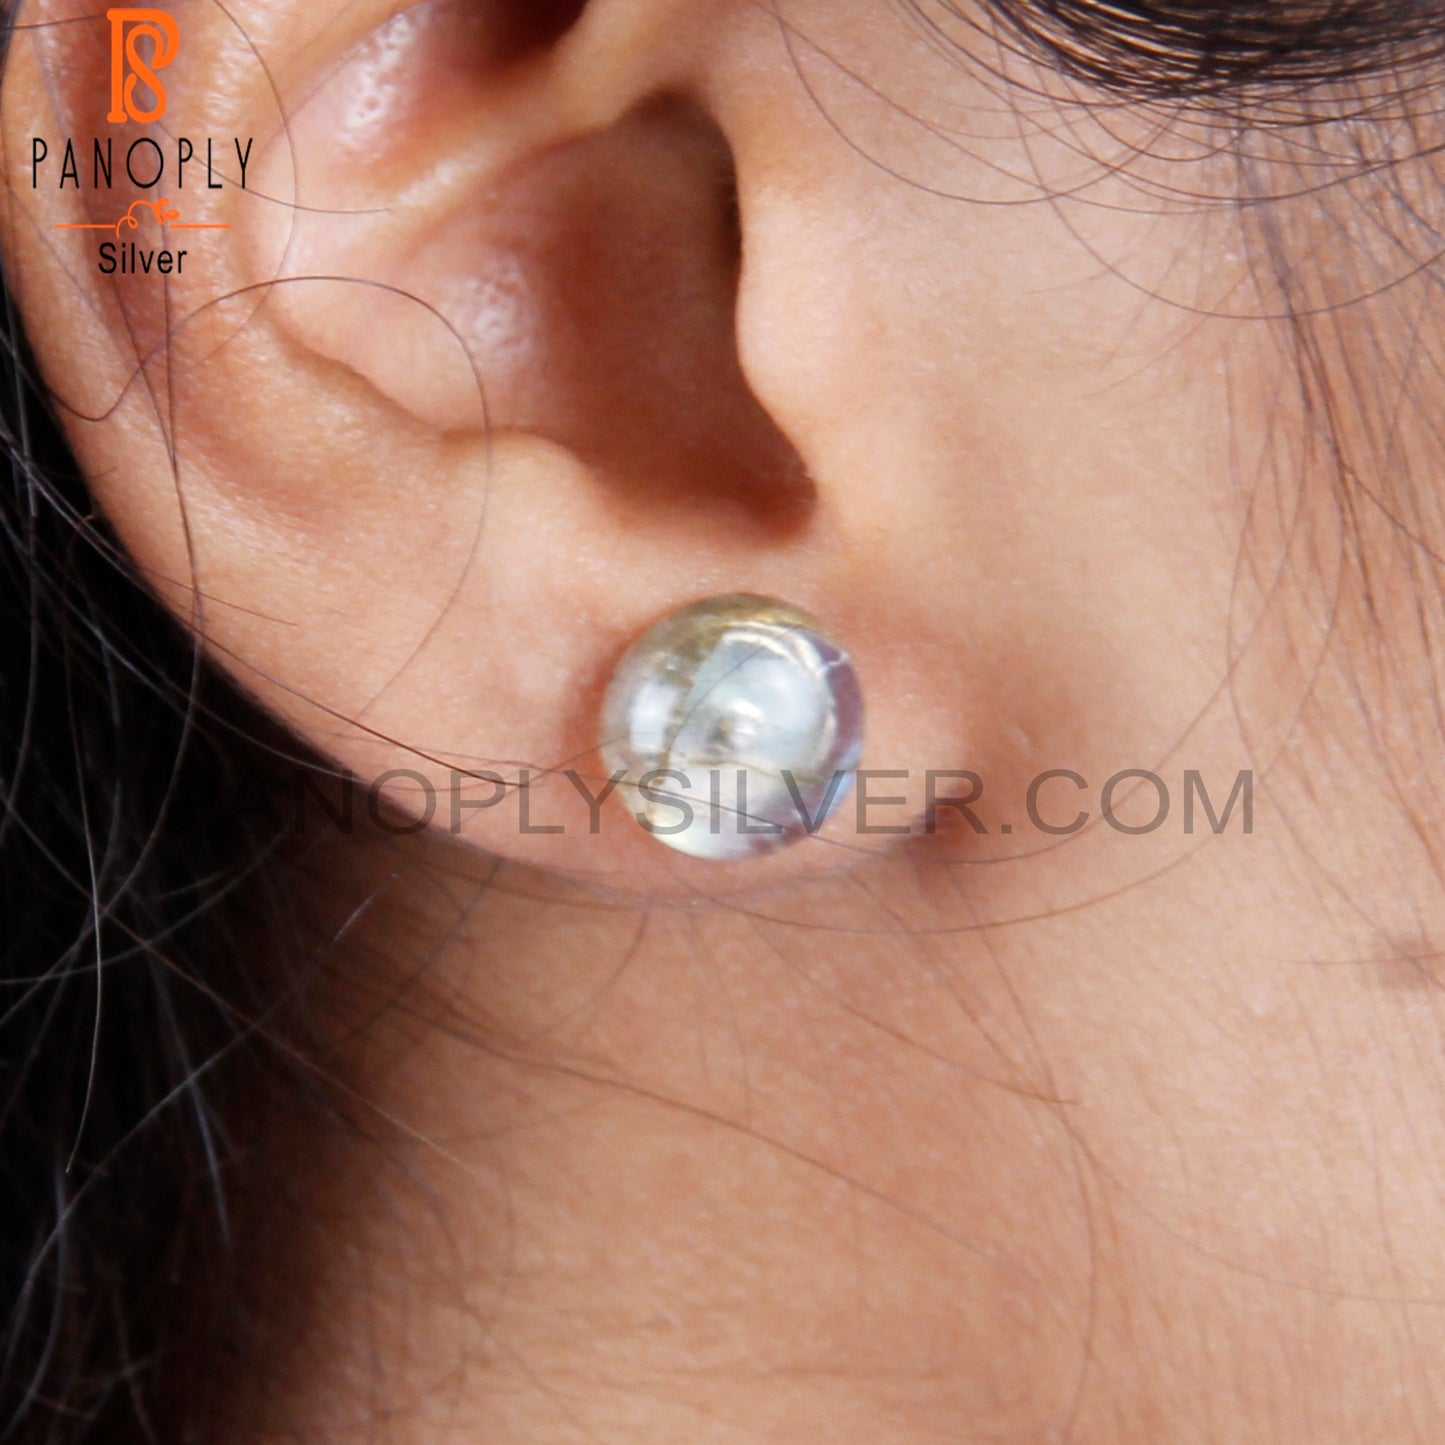 Doublet Labradorite Crystal 925 Sterling Silver Stud Earrings